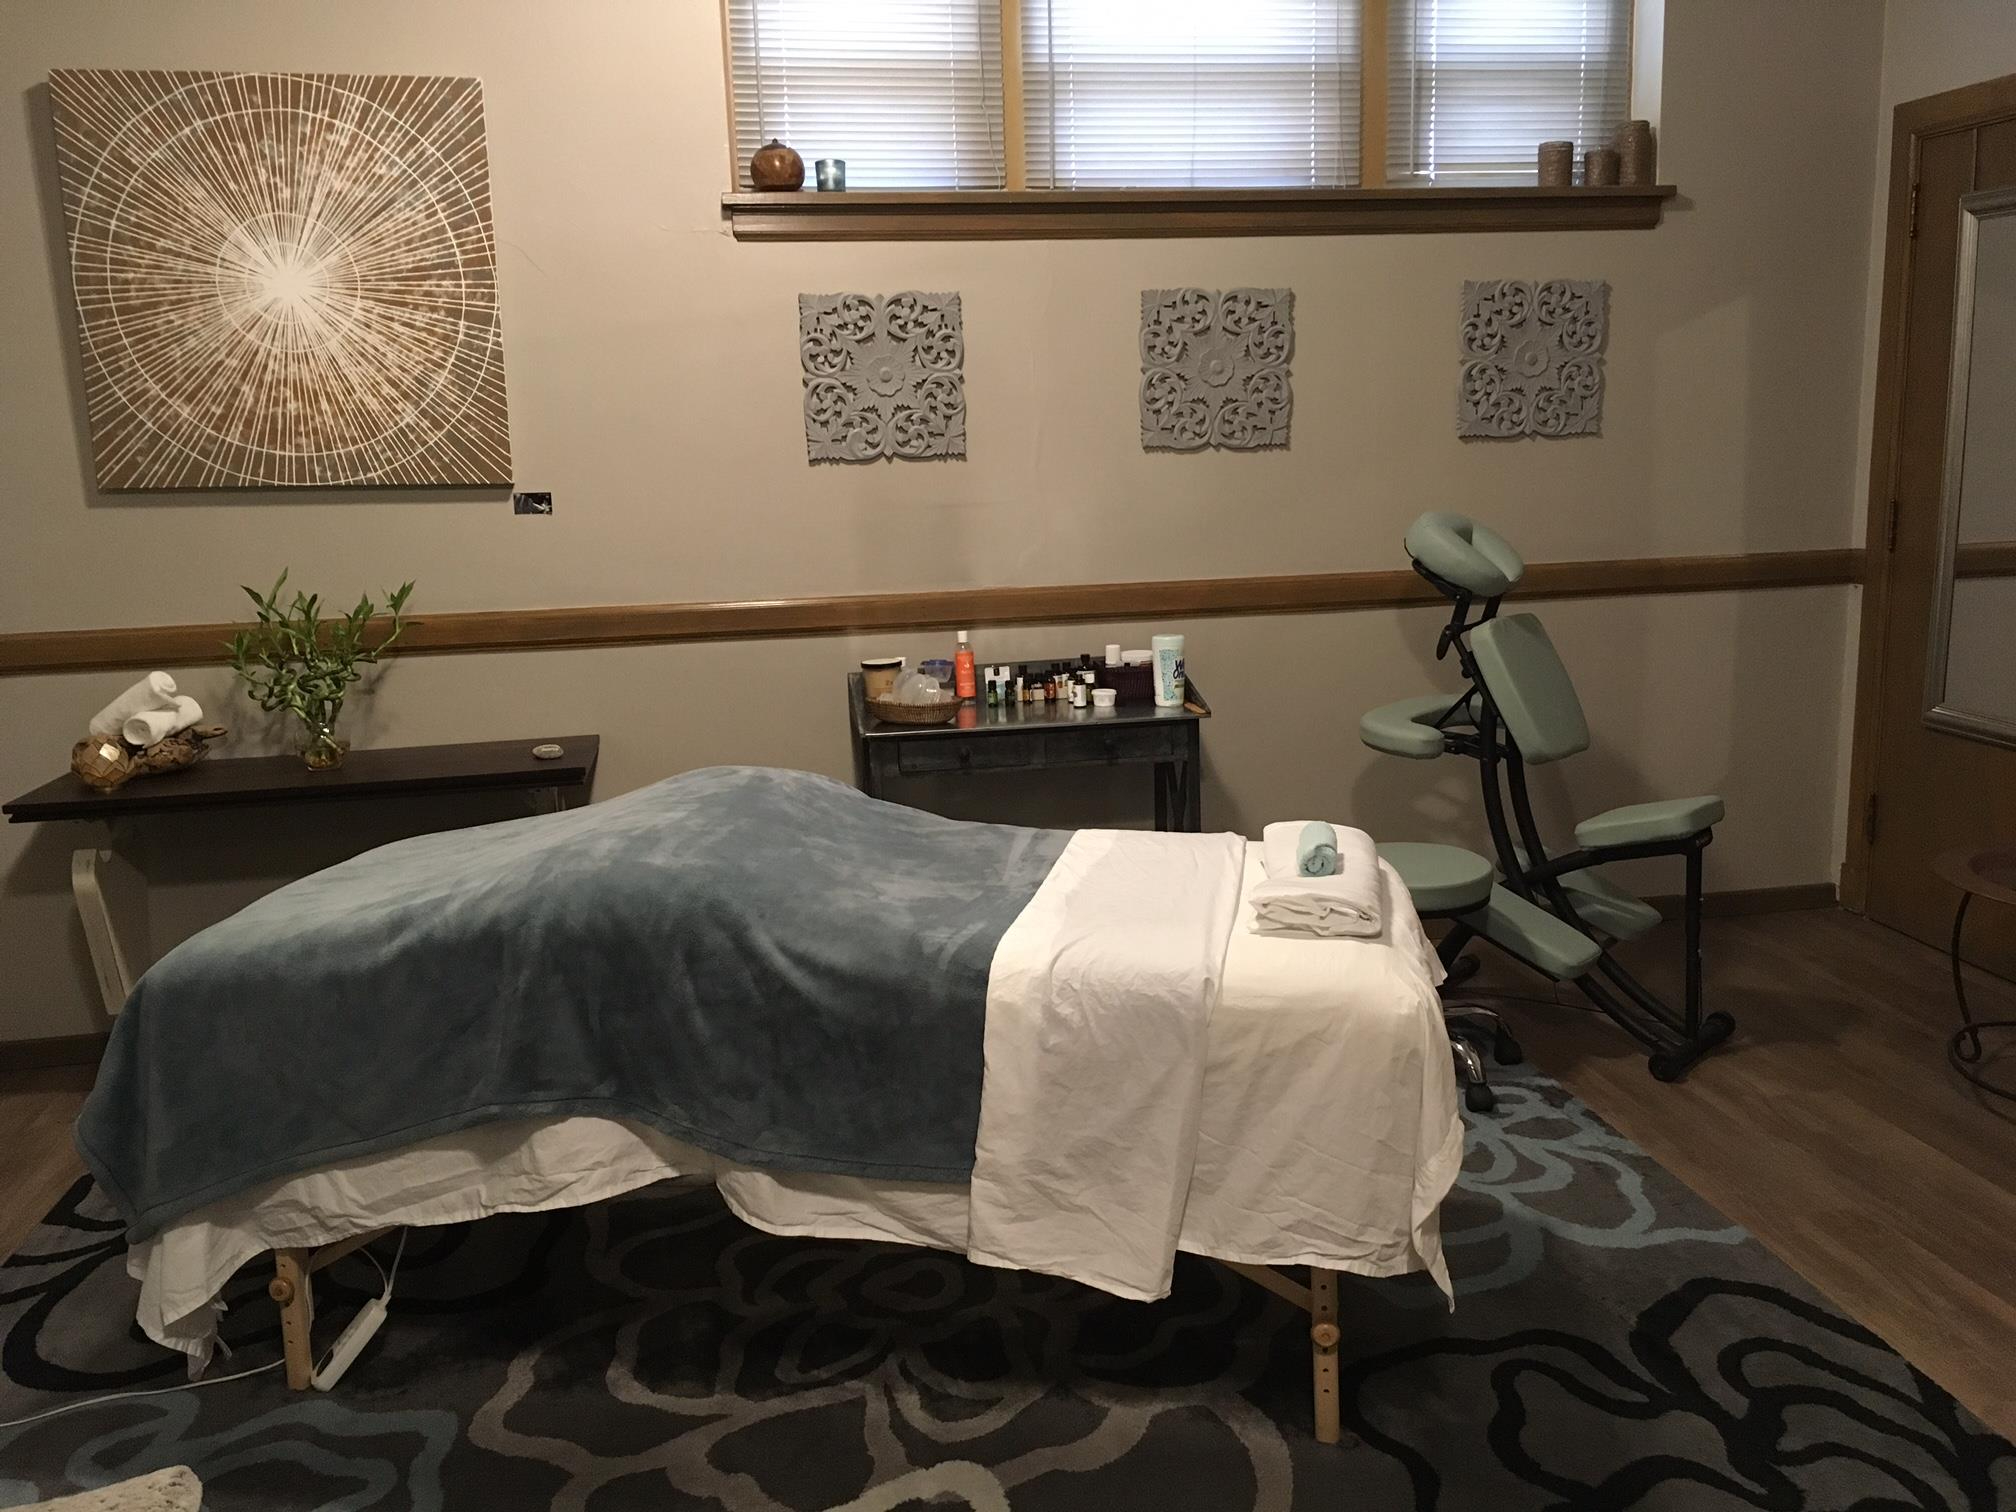 Ks Massage Therapy In Burlington Ia Vagaro